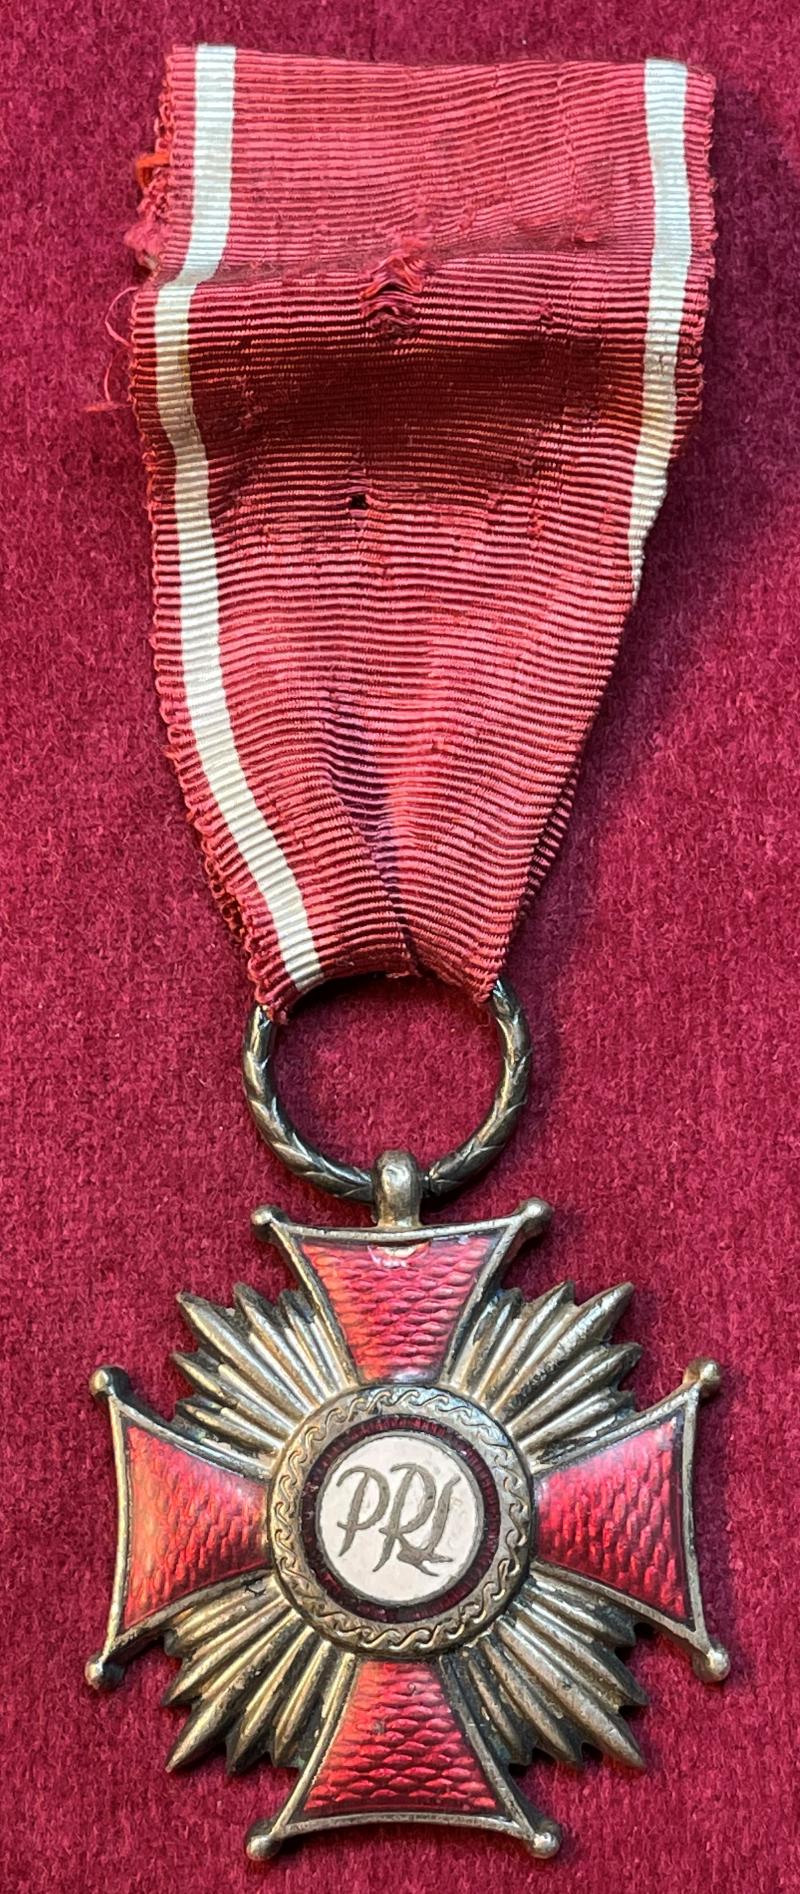 Poland PRL Krzyż Zasługi (Cross of Merit) Silver